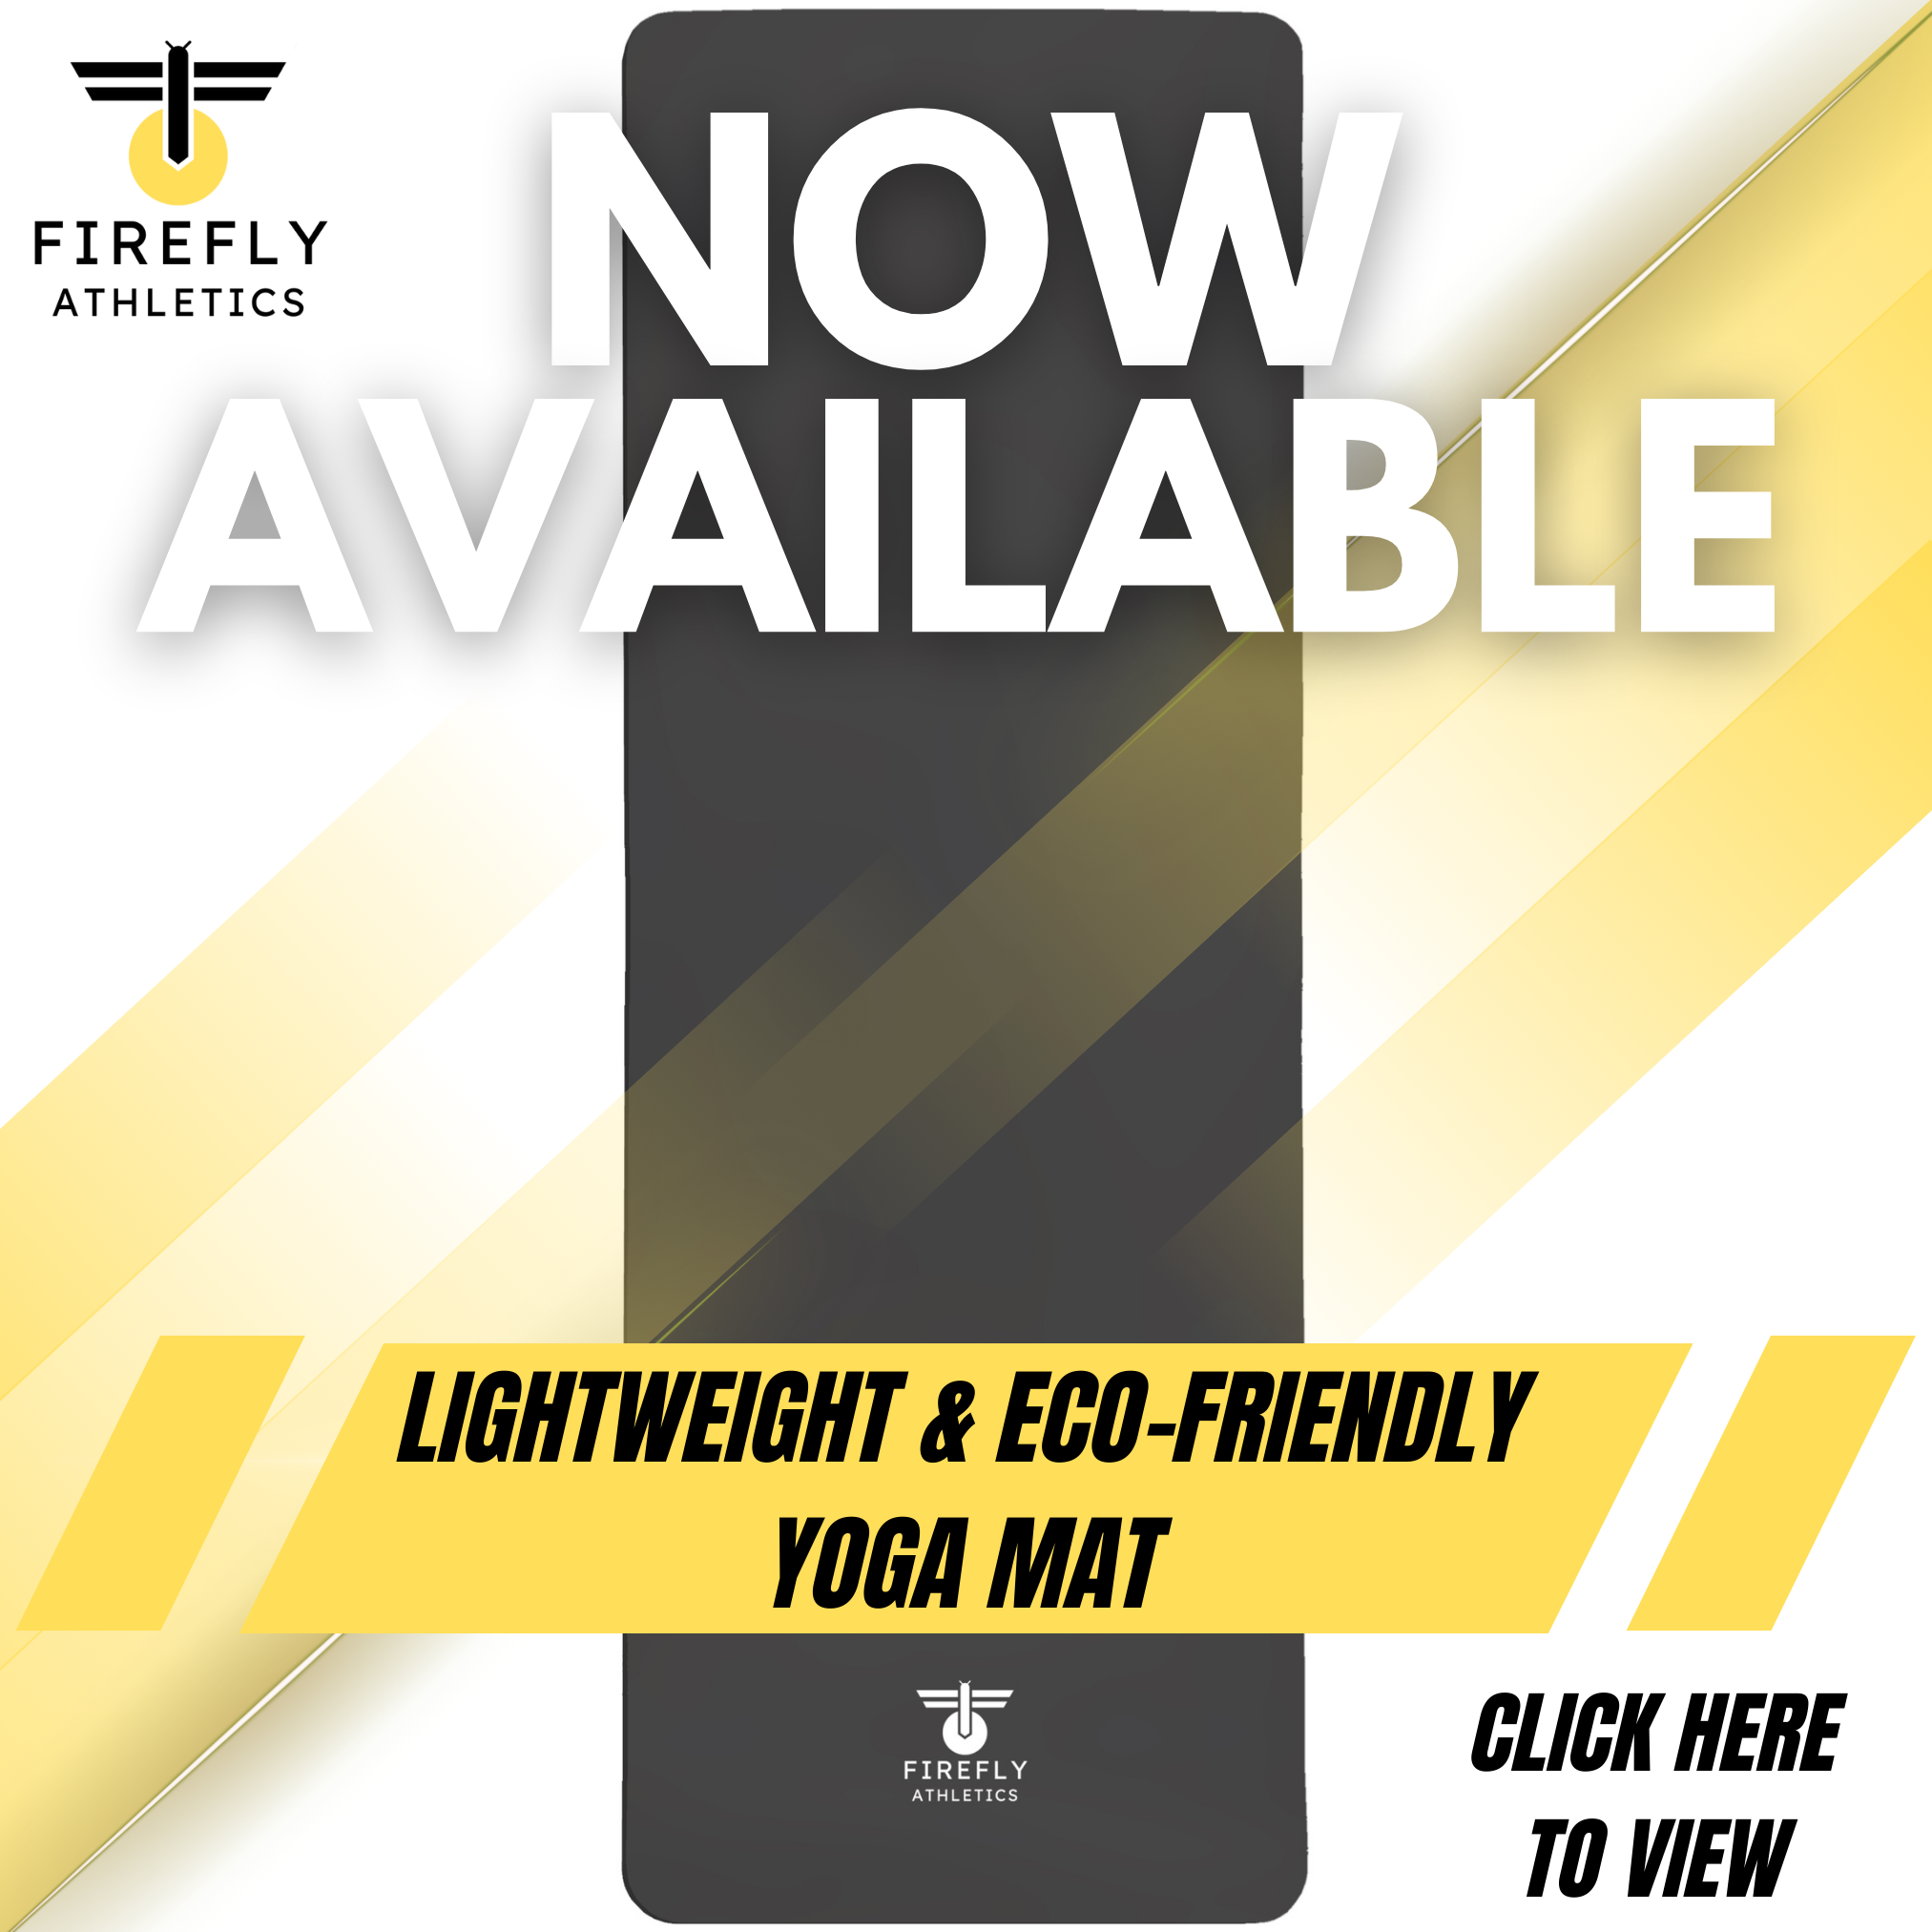 Firefly Athletics – Athletics, Fitness Equipment, Sportswear, and